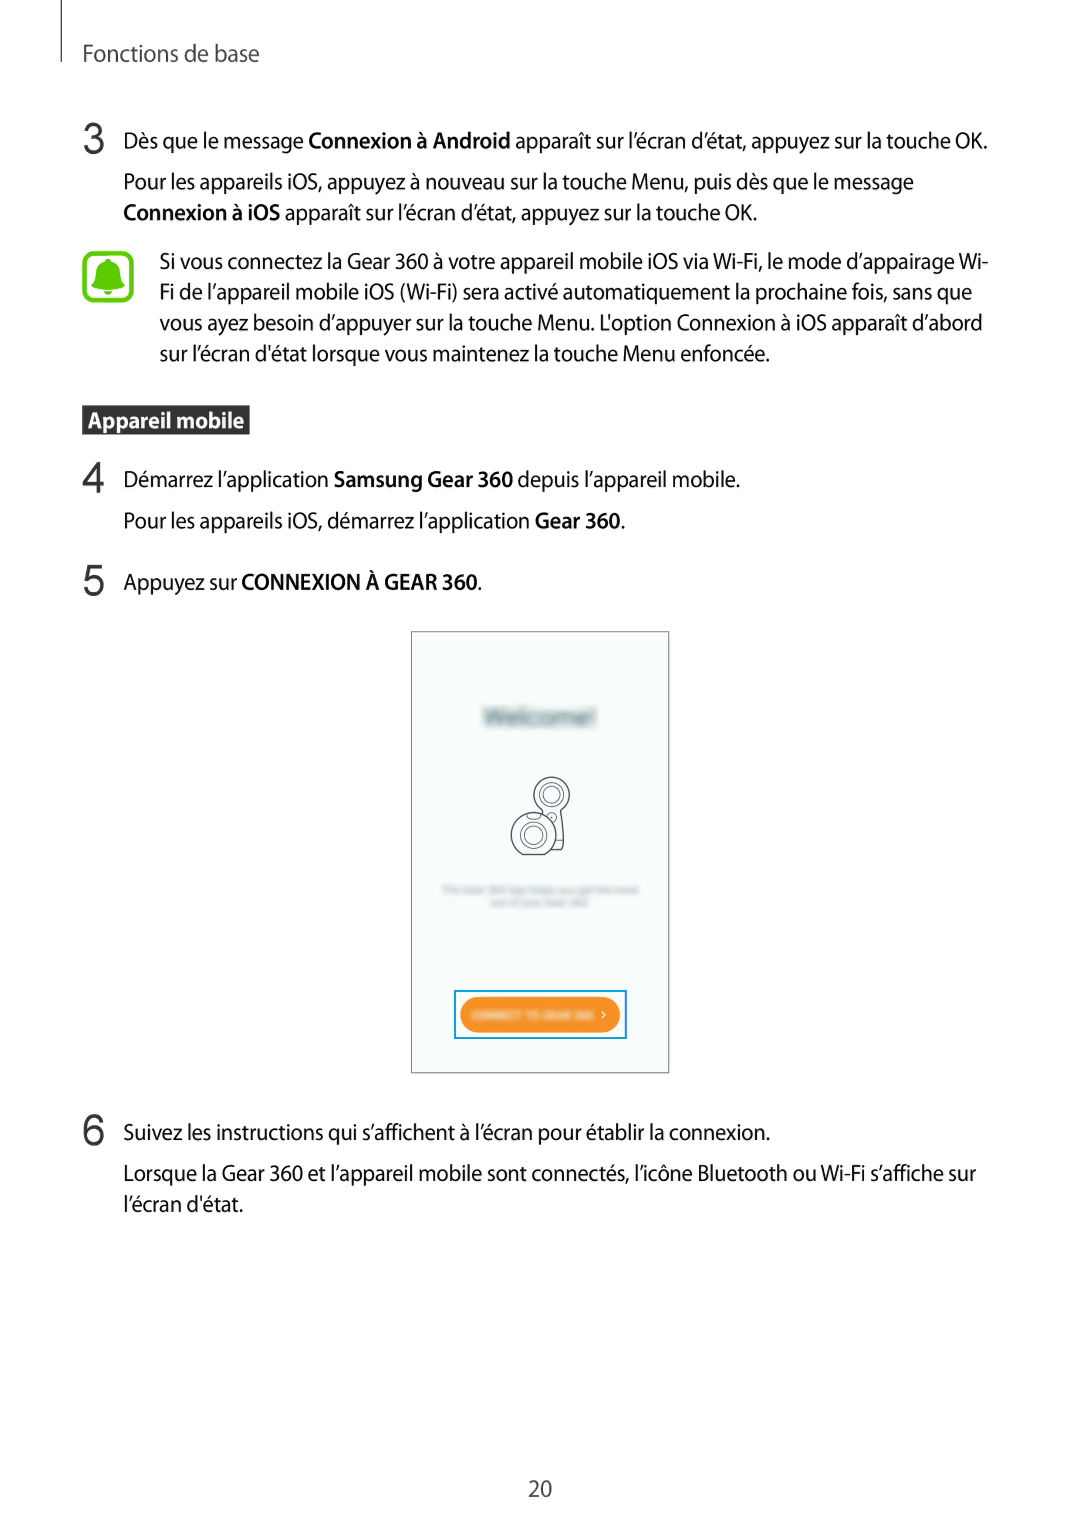 Samsung SM-R210NZWAXEF manual  Appareil mobile , Appuyez sur Connexion À Gear 